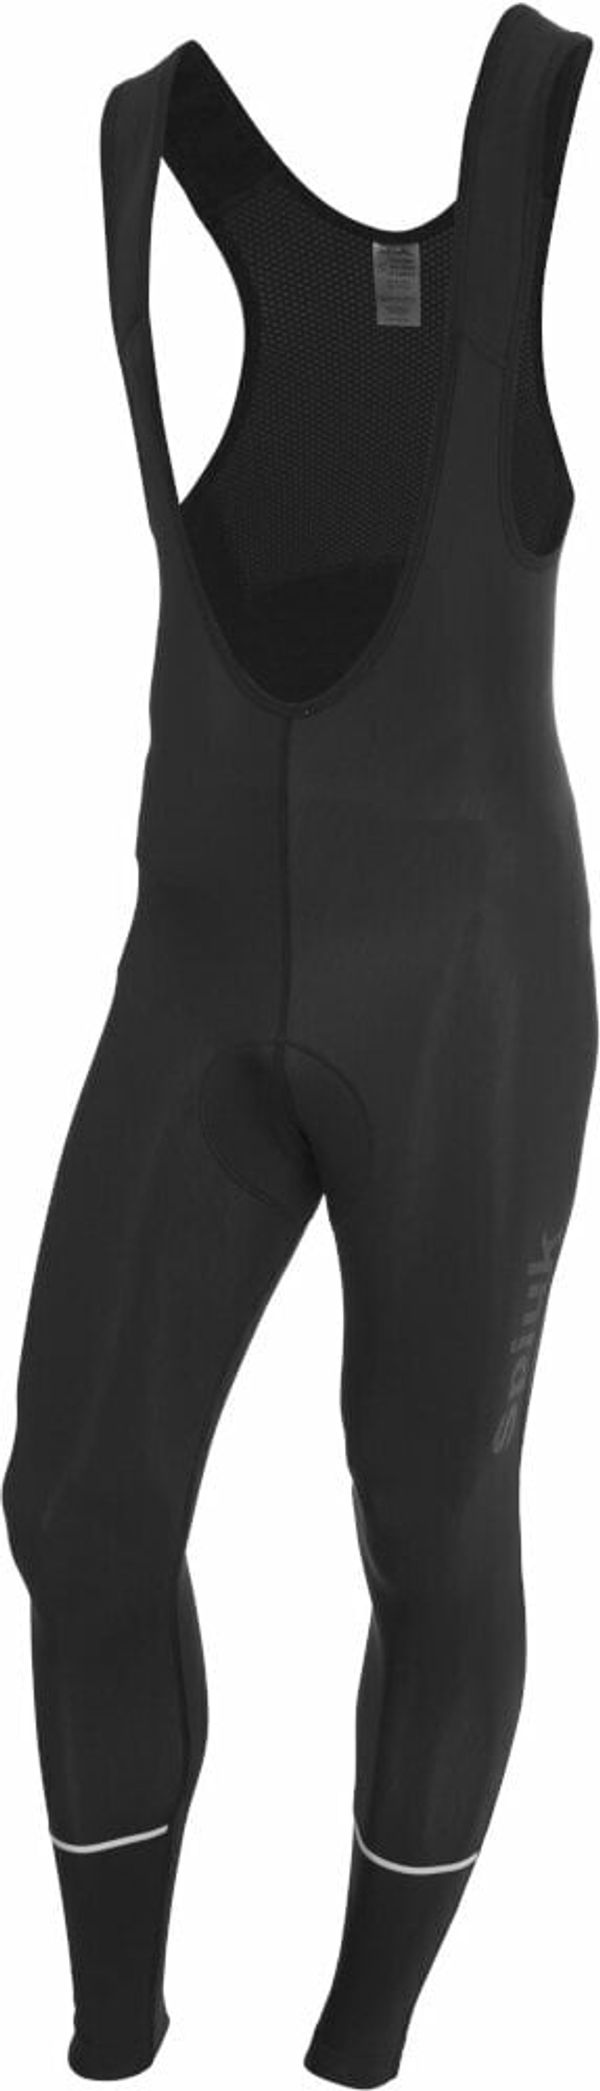 Spiuk Spiuk Anatomic Bib Pants Black/White XL Kolesarske hlače